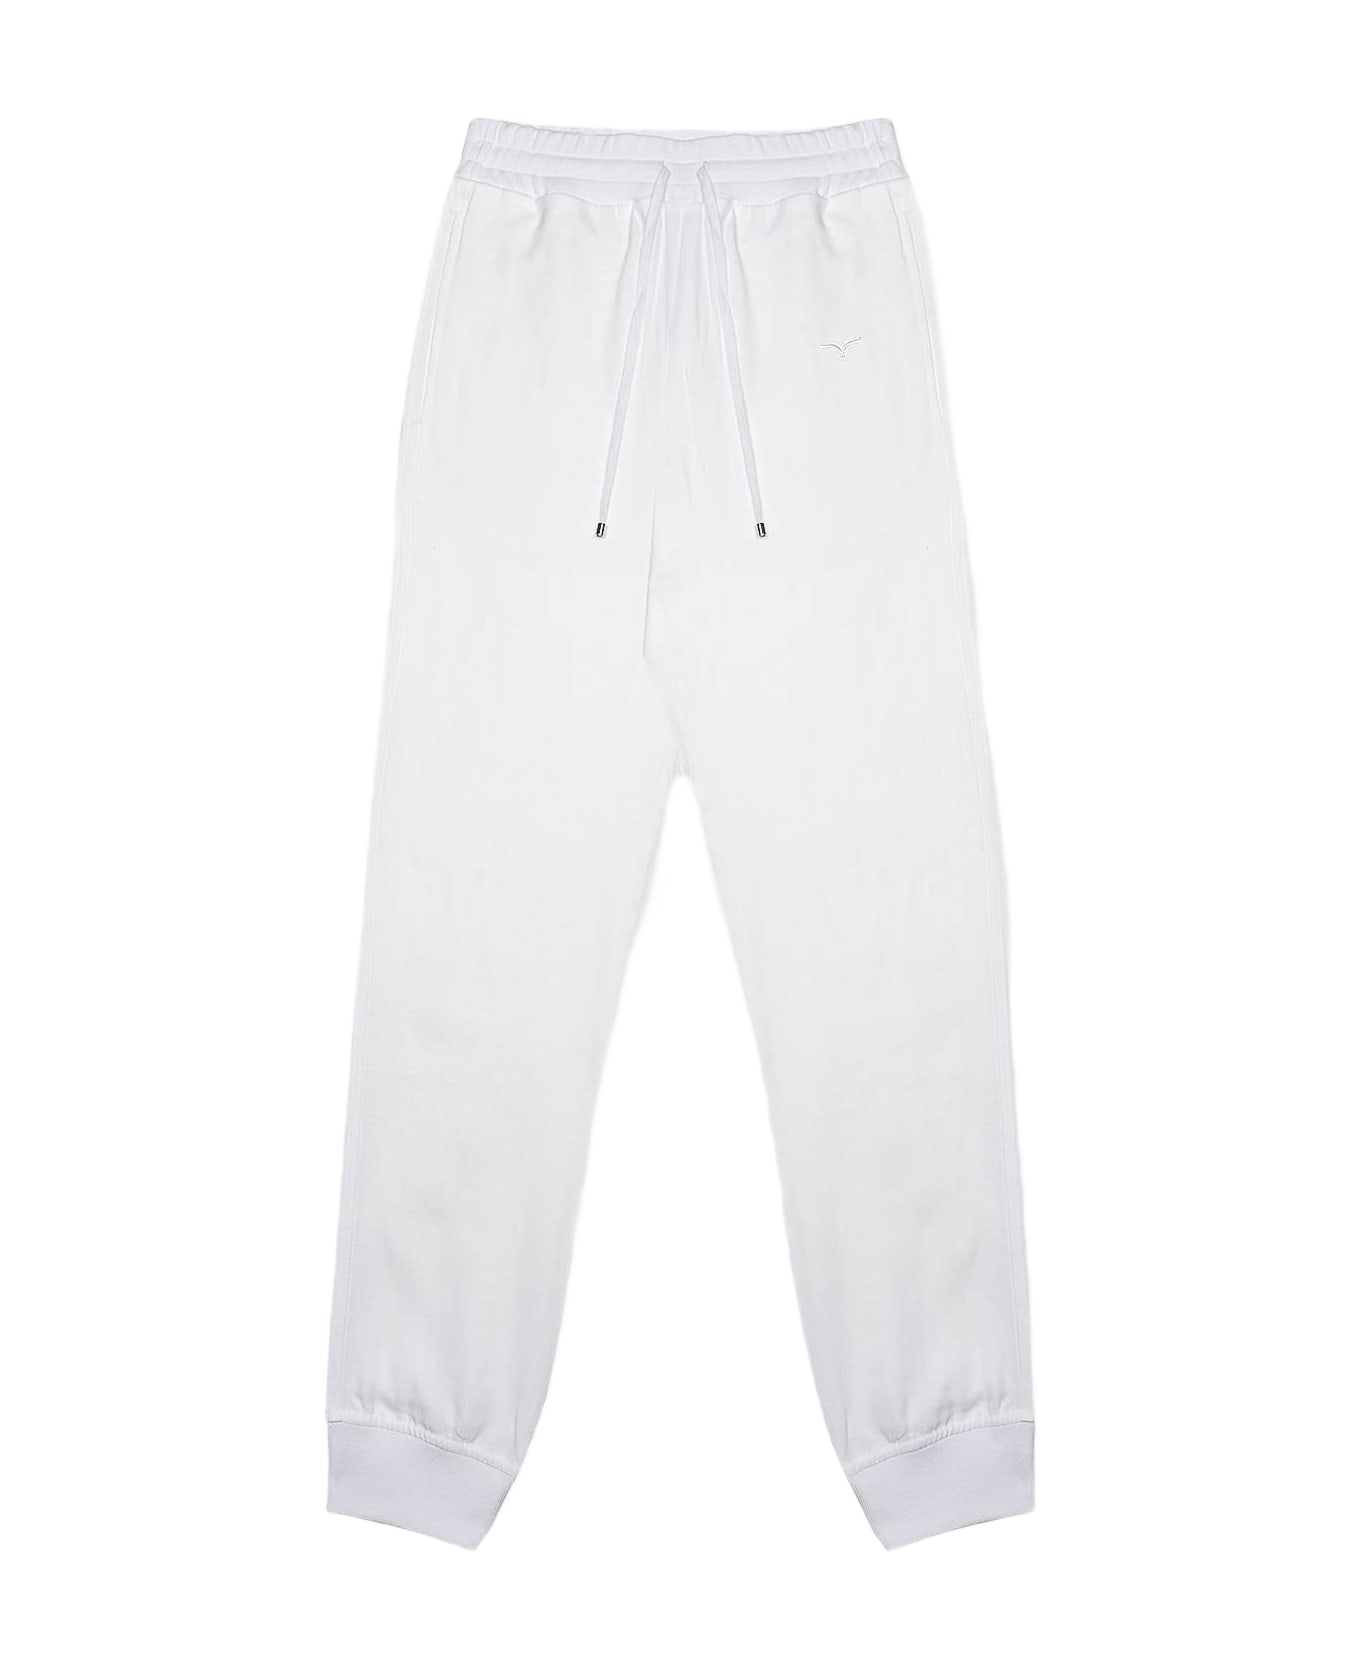 Larusmiani Tracksuit Trousers 'korfu' Pants - White